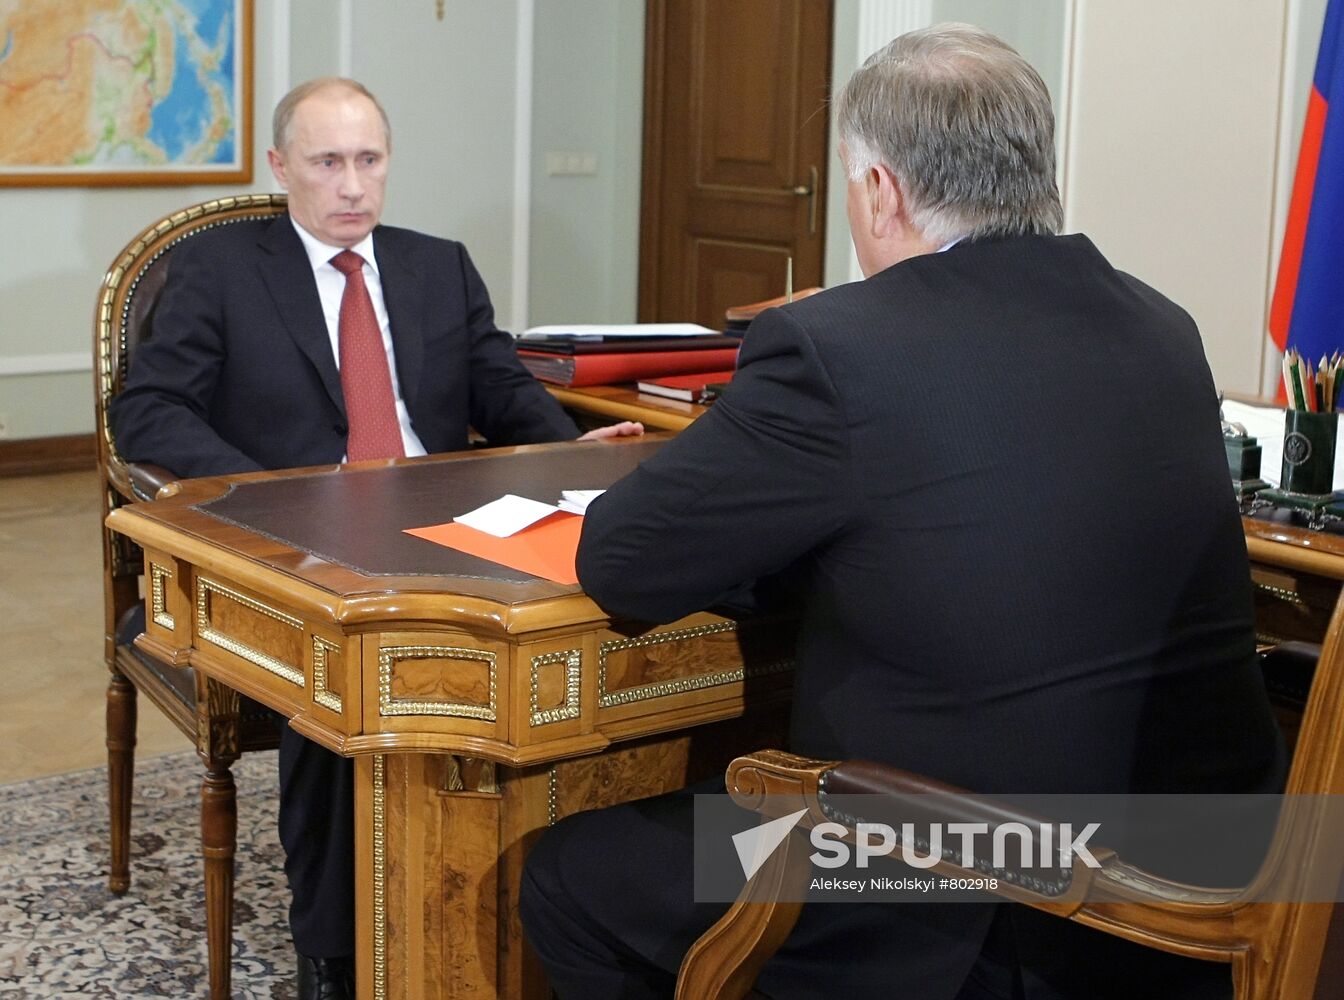 Vladimir Putin meets with Vladimir Yakunin